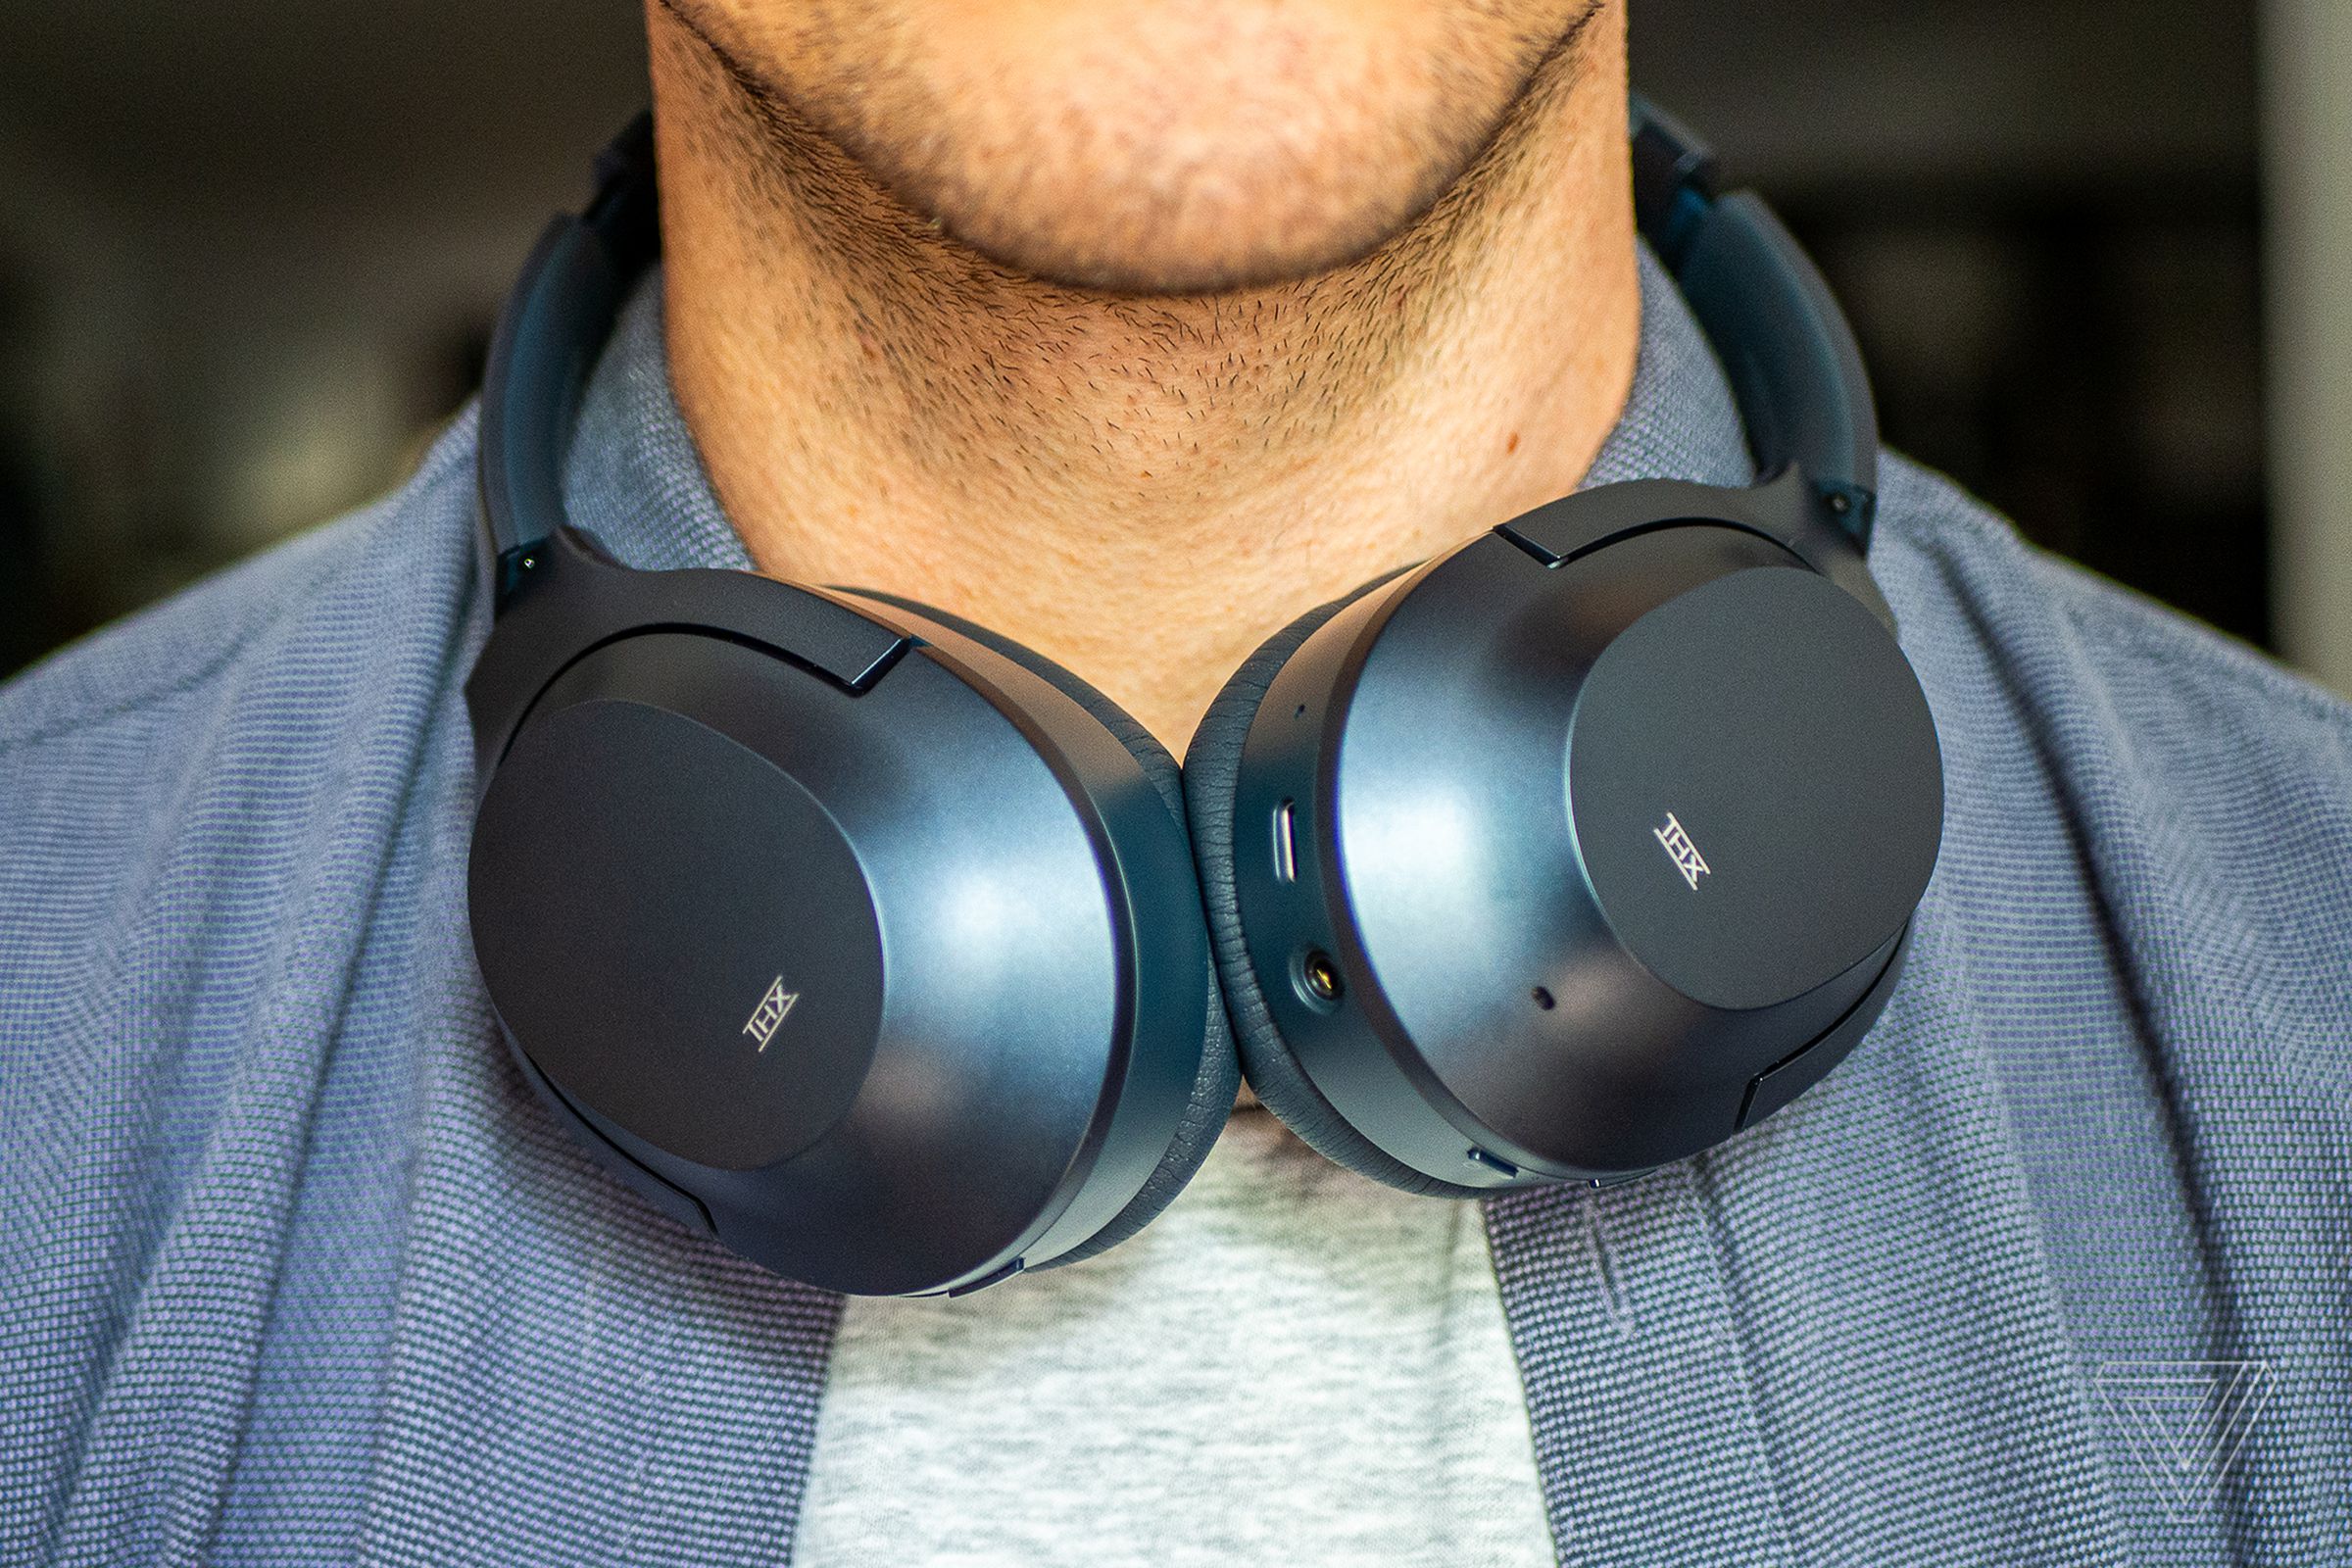 Razer Opus, the best noise-canceling headphones for around $200, worn around the neck.